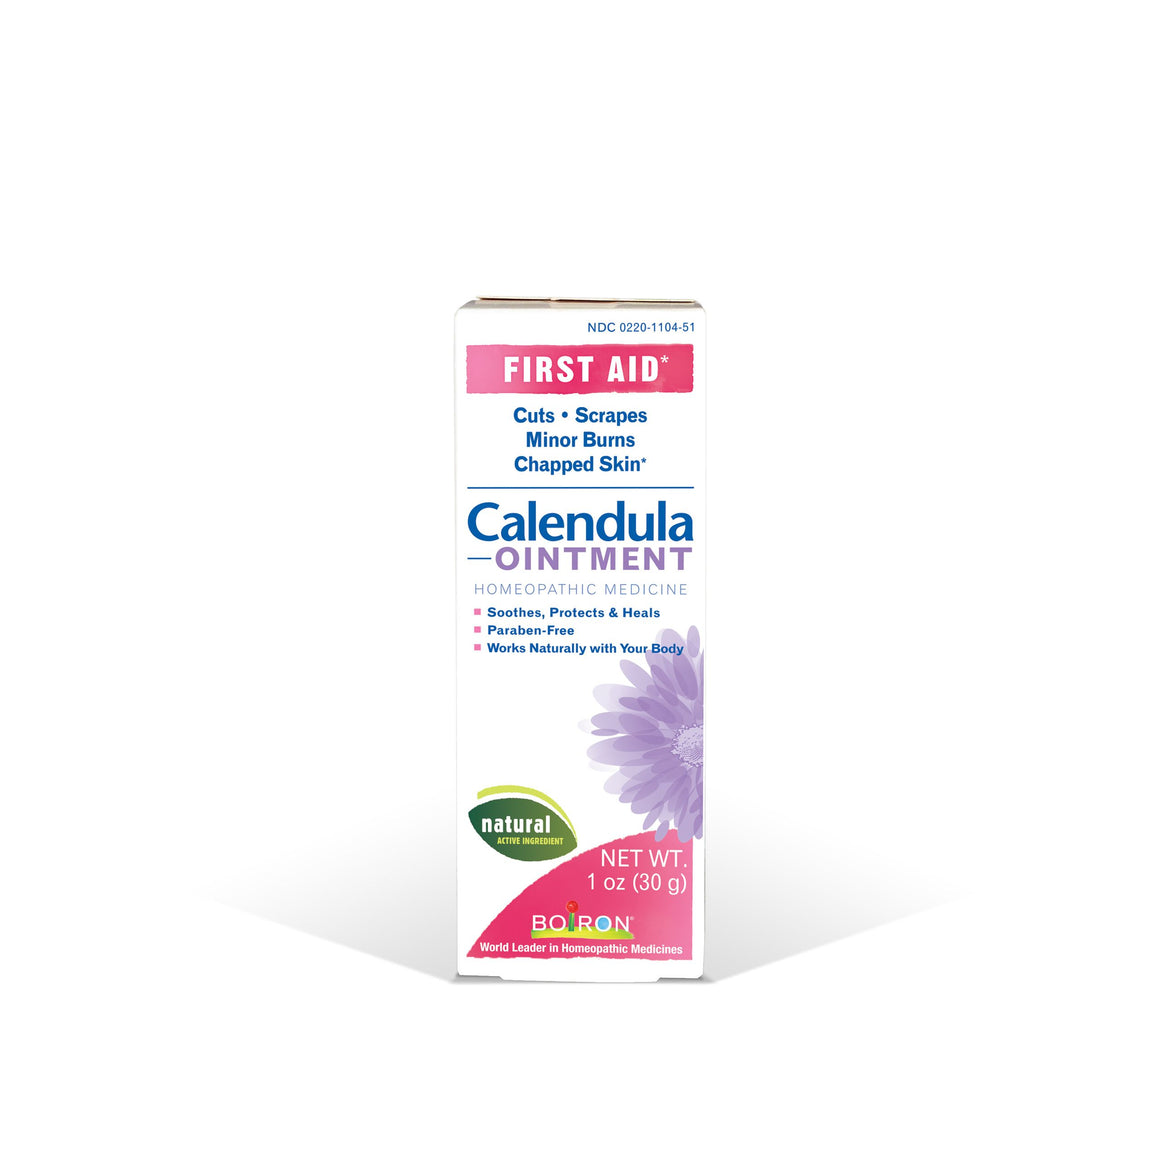 A package of Boiron Calendula Ointment